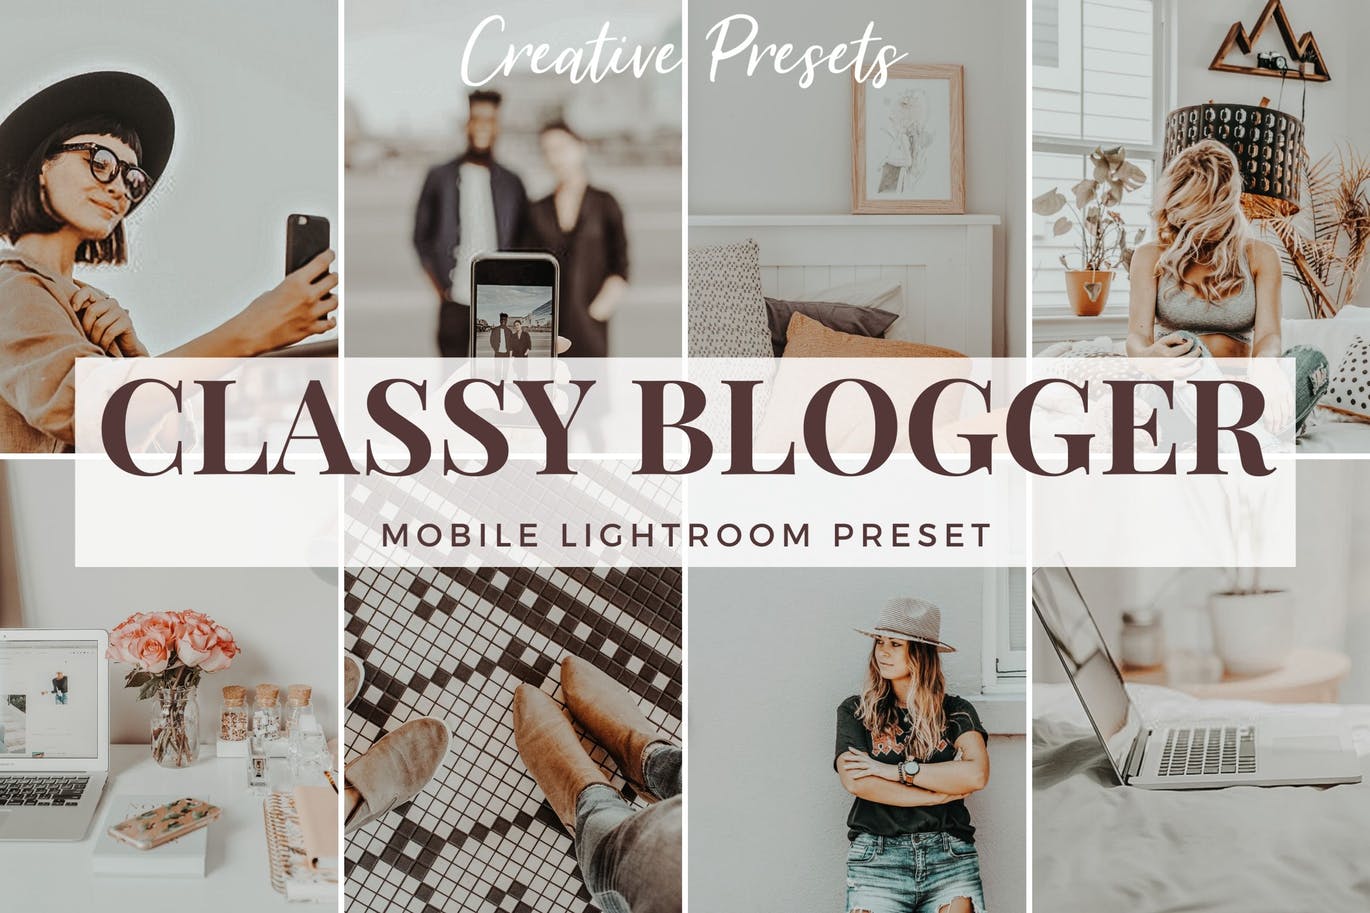 永恒经典照片风格调色滤镜第一素材精选LR预设 Classy Blogger – Mobile Lightroom Preset插图